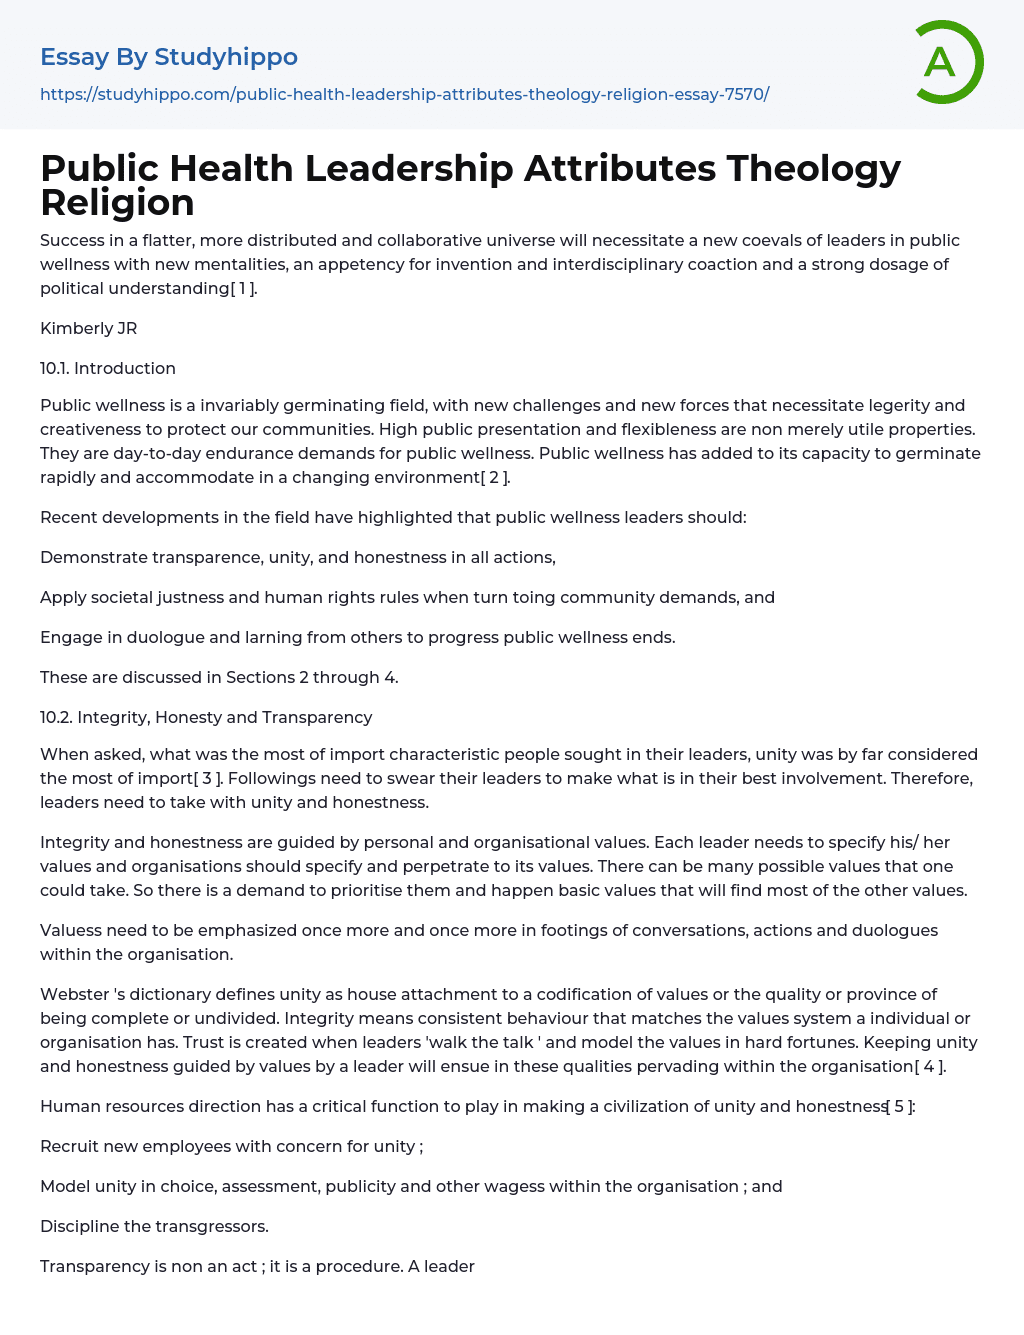 Public Health Leadership Attributes Theology Religion Essay Example